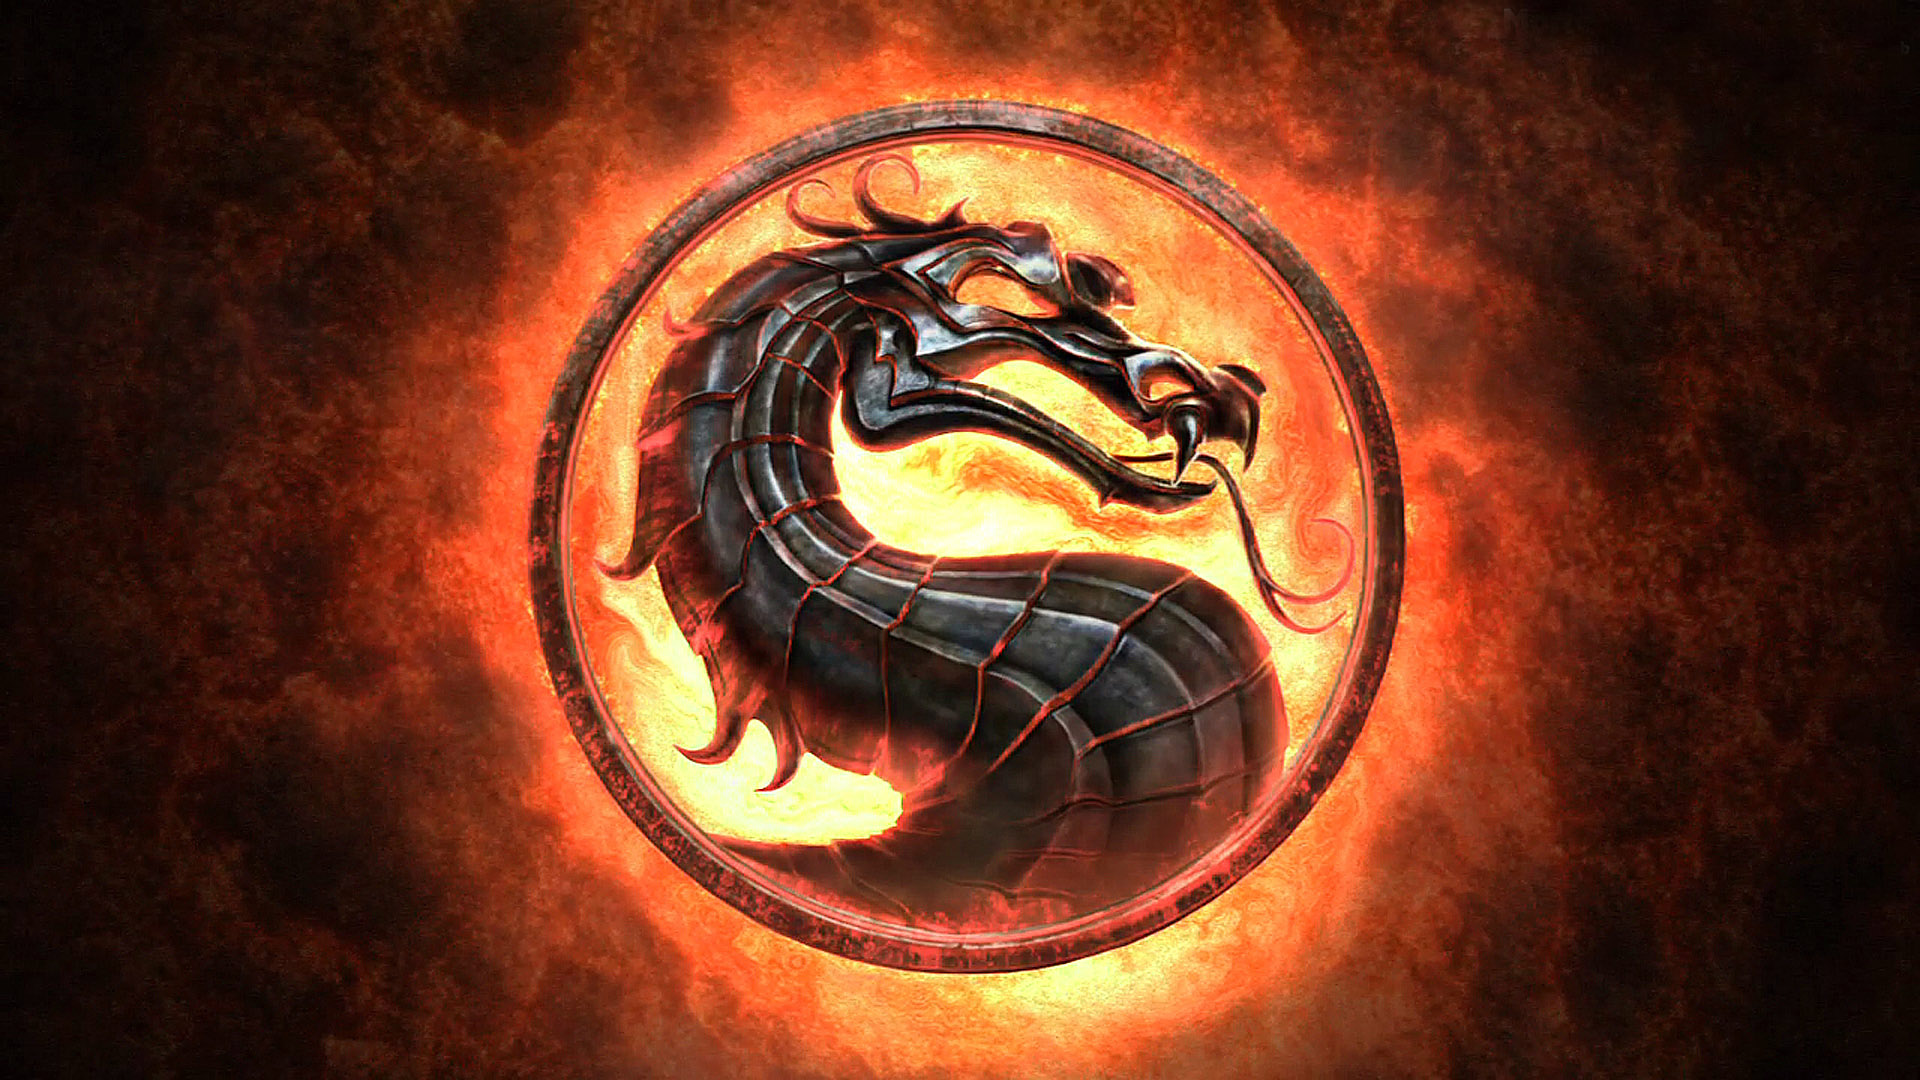 Mortal Kombat Komplete Edition announced for PC